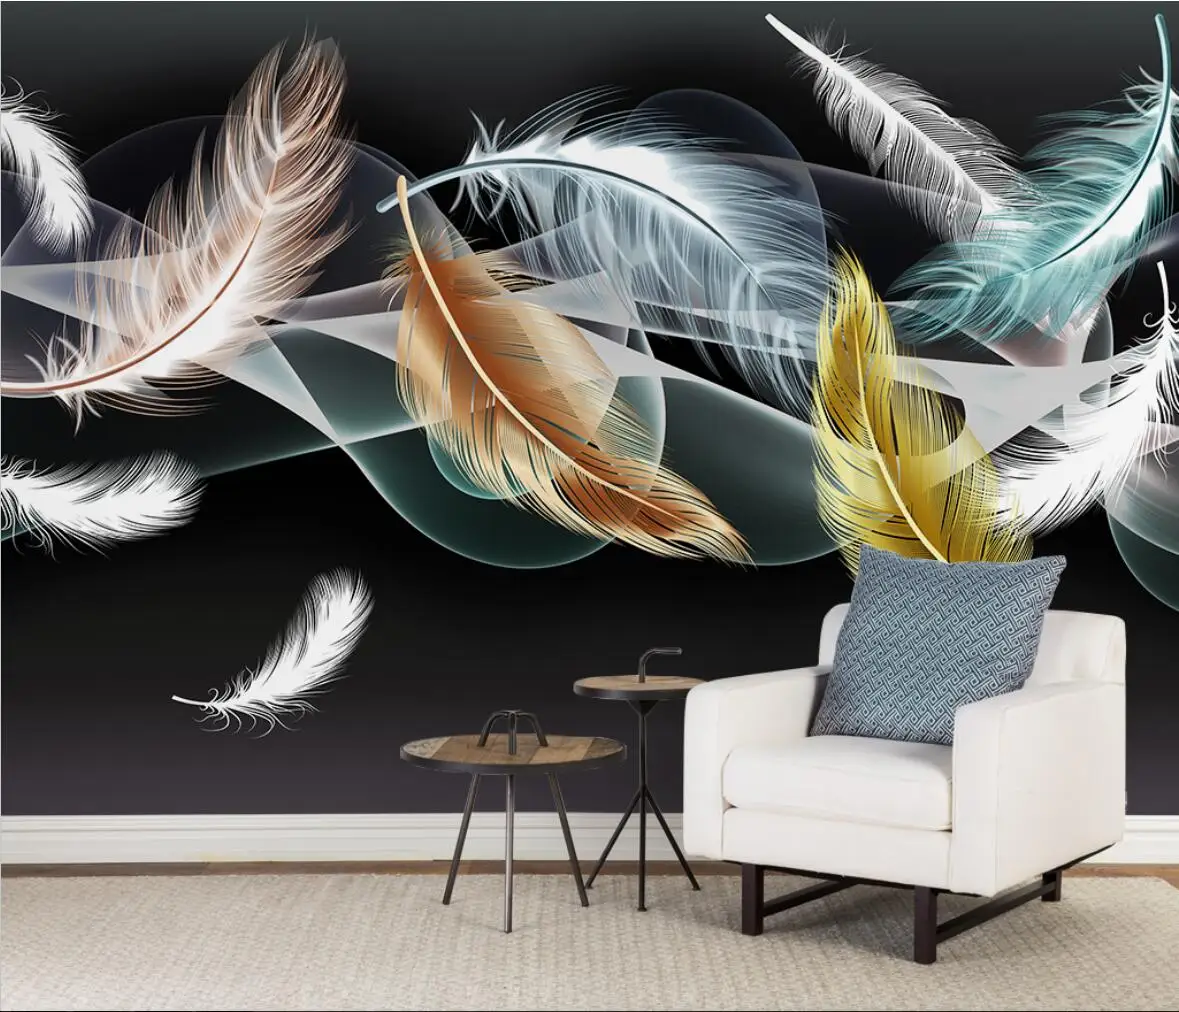 

beibehang custom 3D Photo Wallpaper Bar KTV Bedroom Backdrop feather smoke Wall Mural Wallpapers for living room home decor